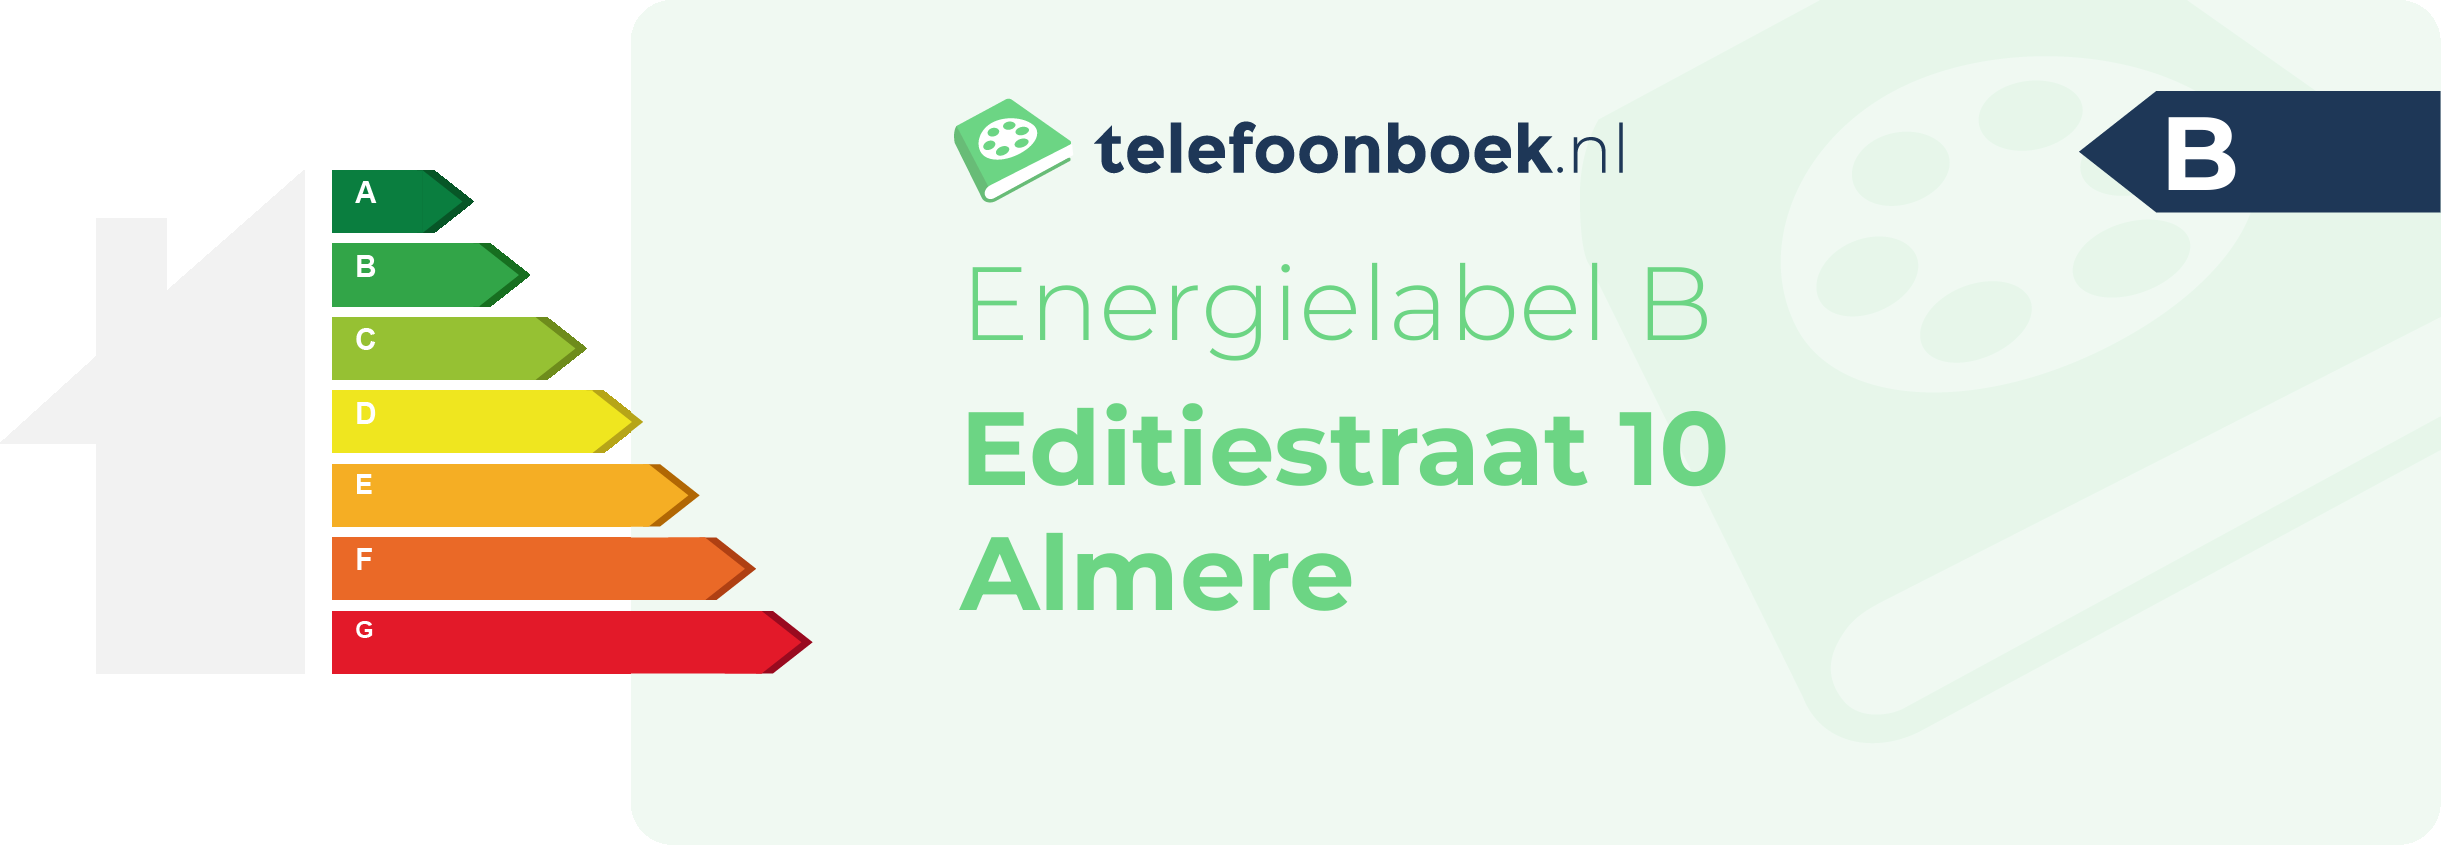 Energielabel Editiestraat 10 Almere